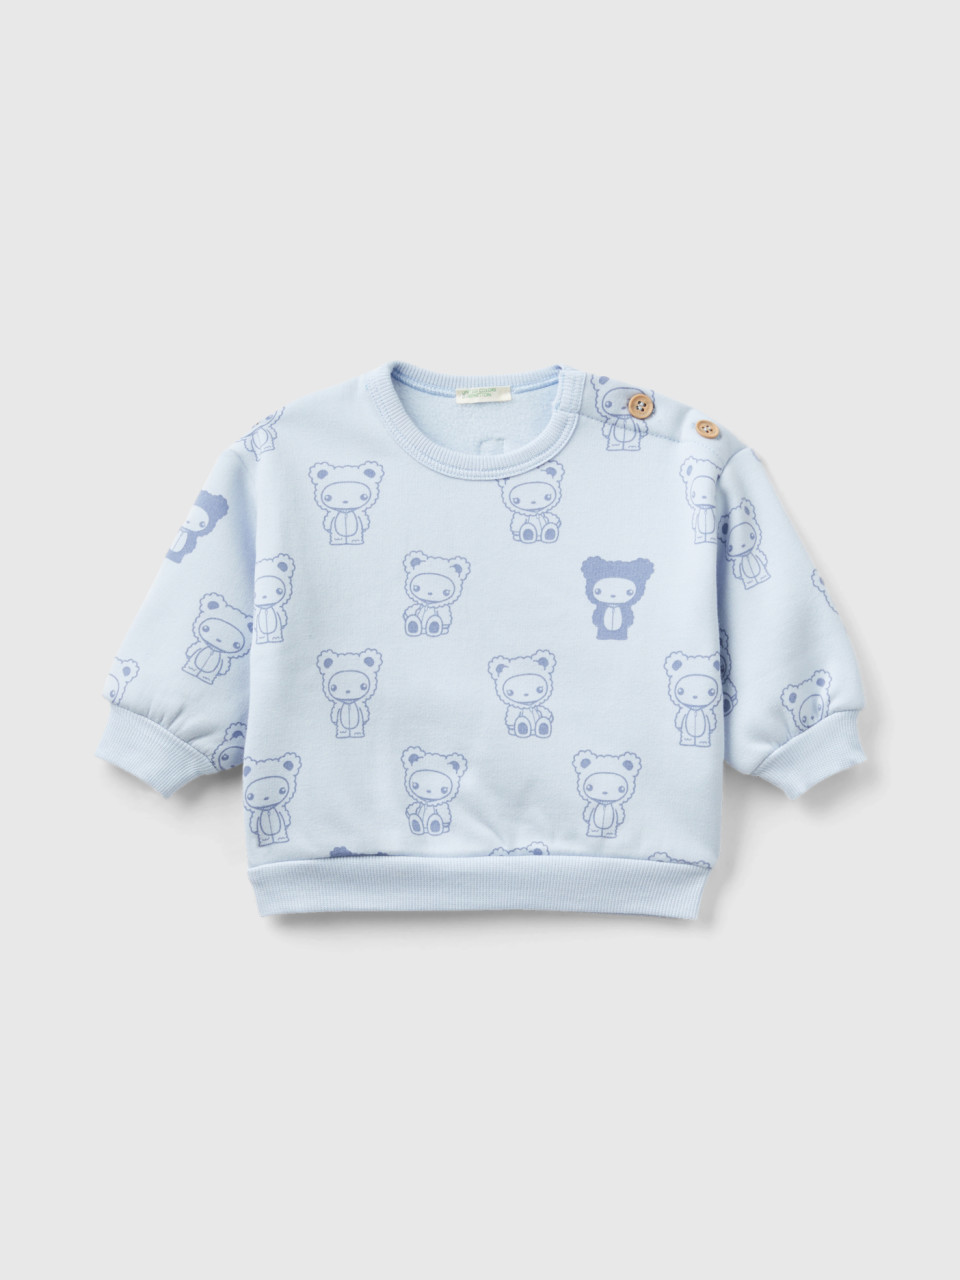 Benetton, Printed Sweatshirt Lined In Chenille, Sky Blue, Kids